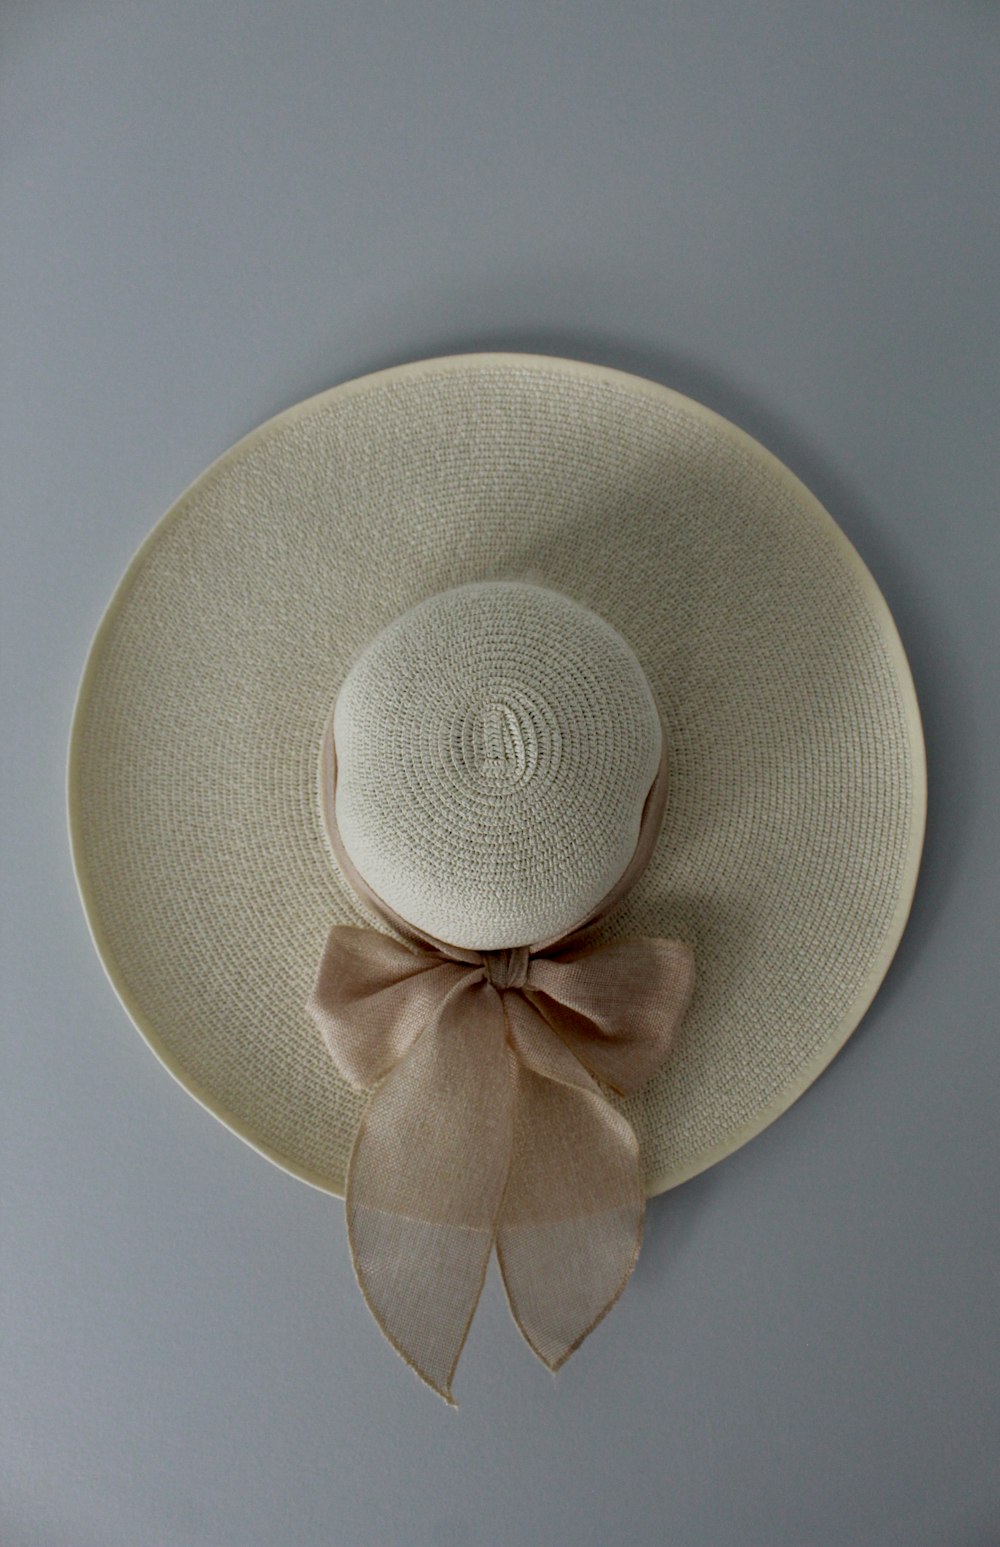 beige hat on white surface